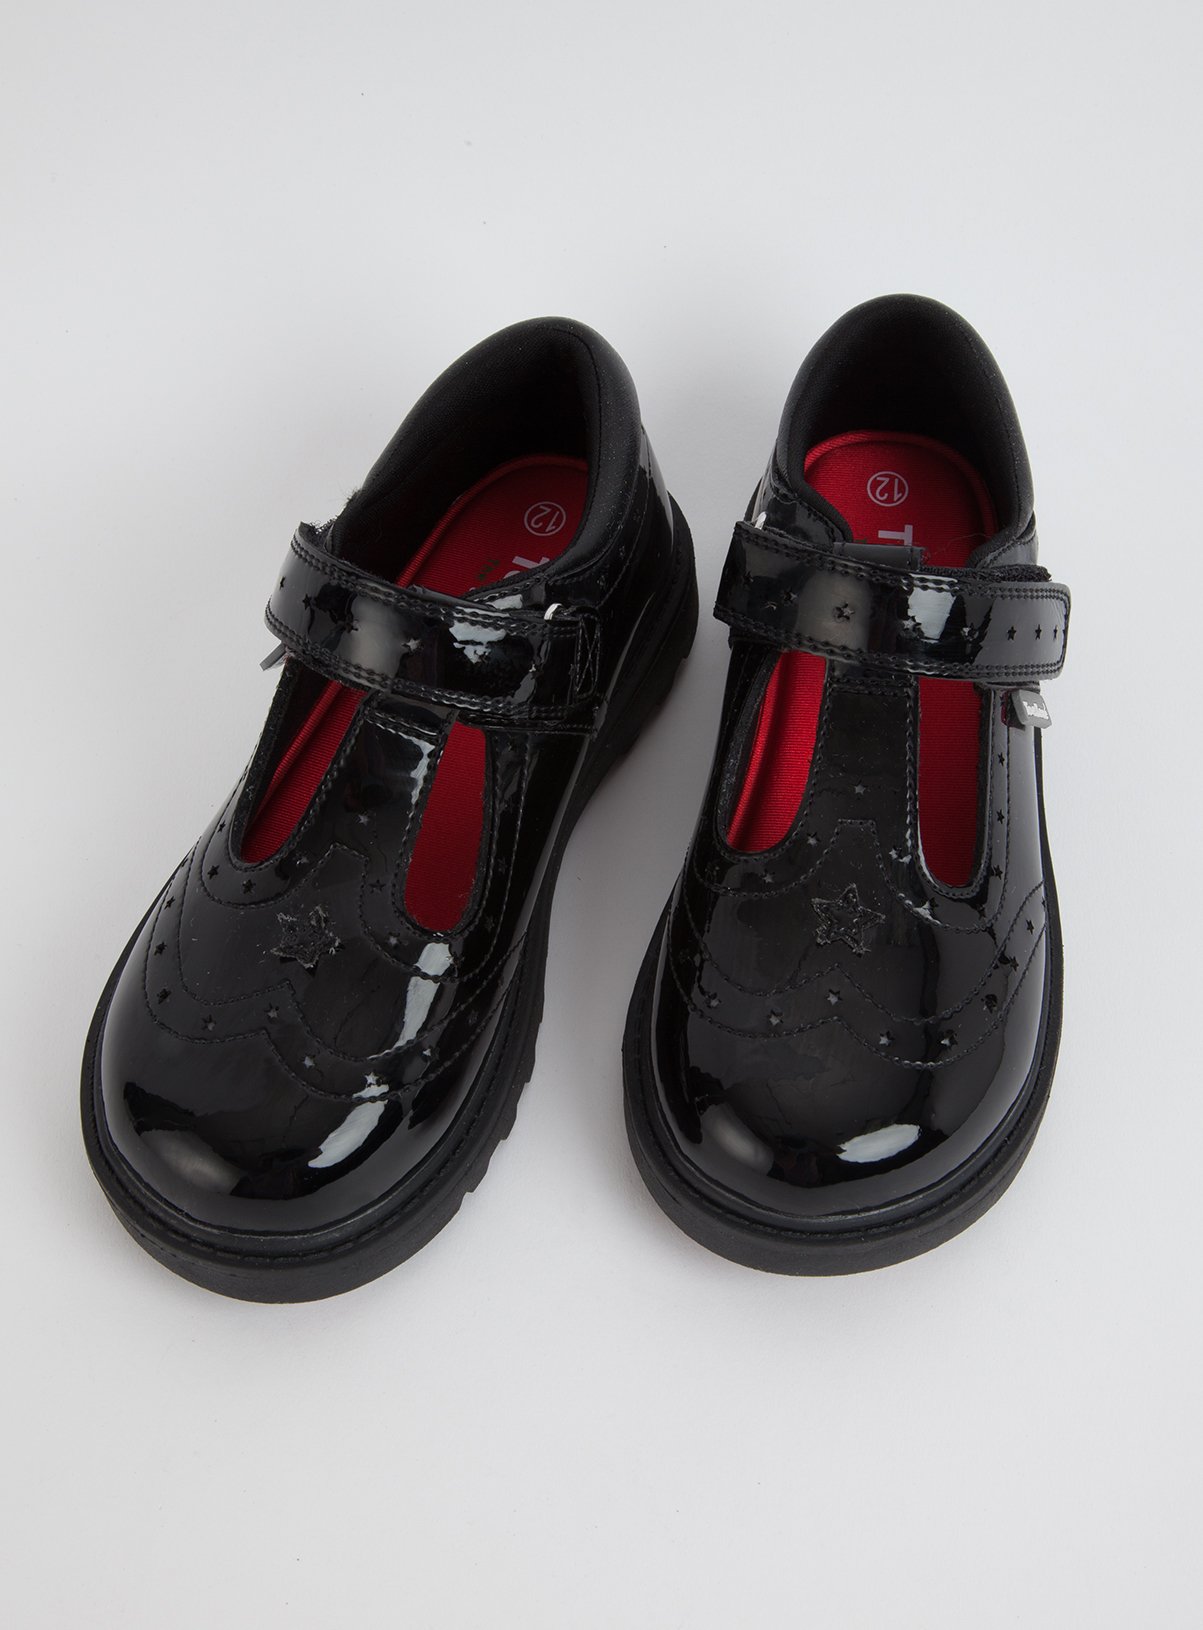 girls black patent shoes